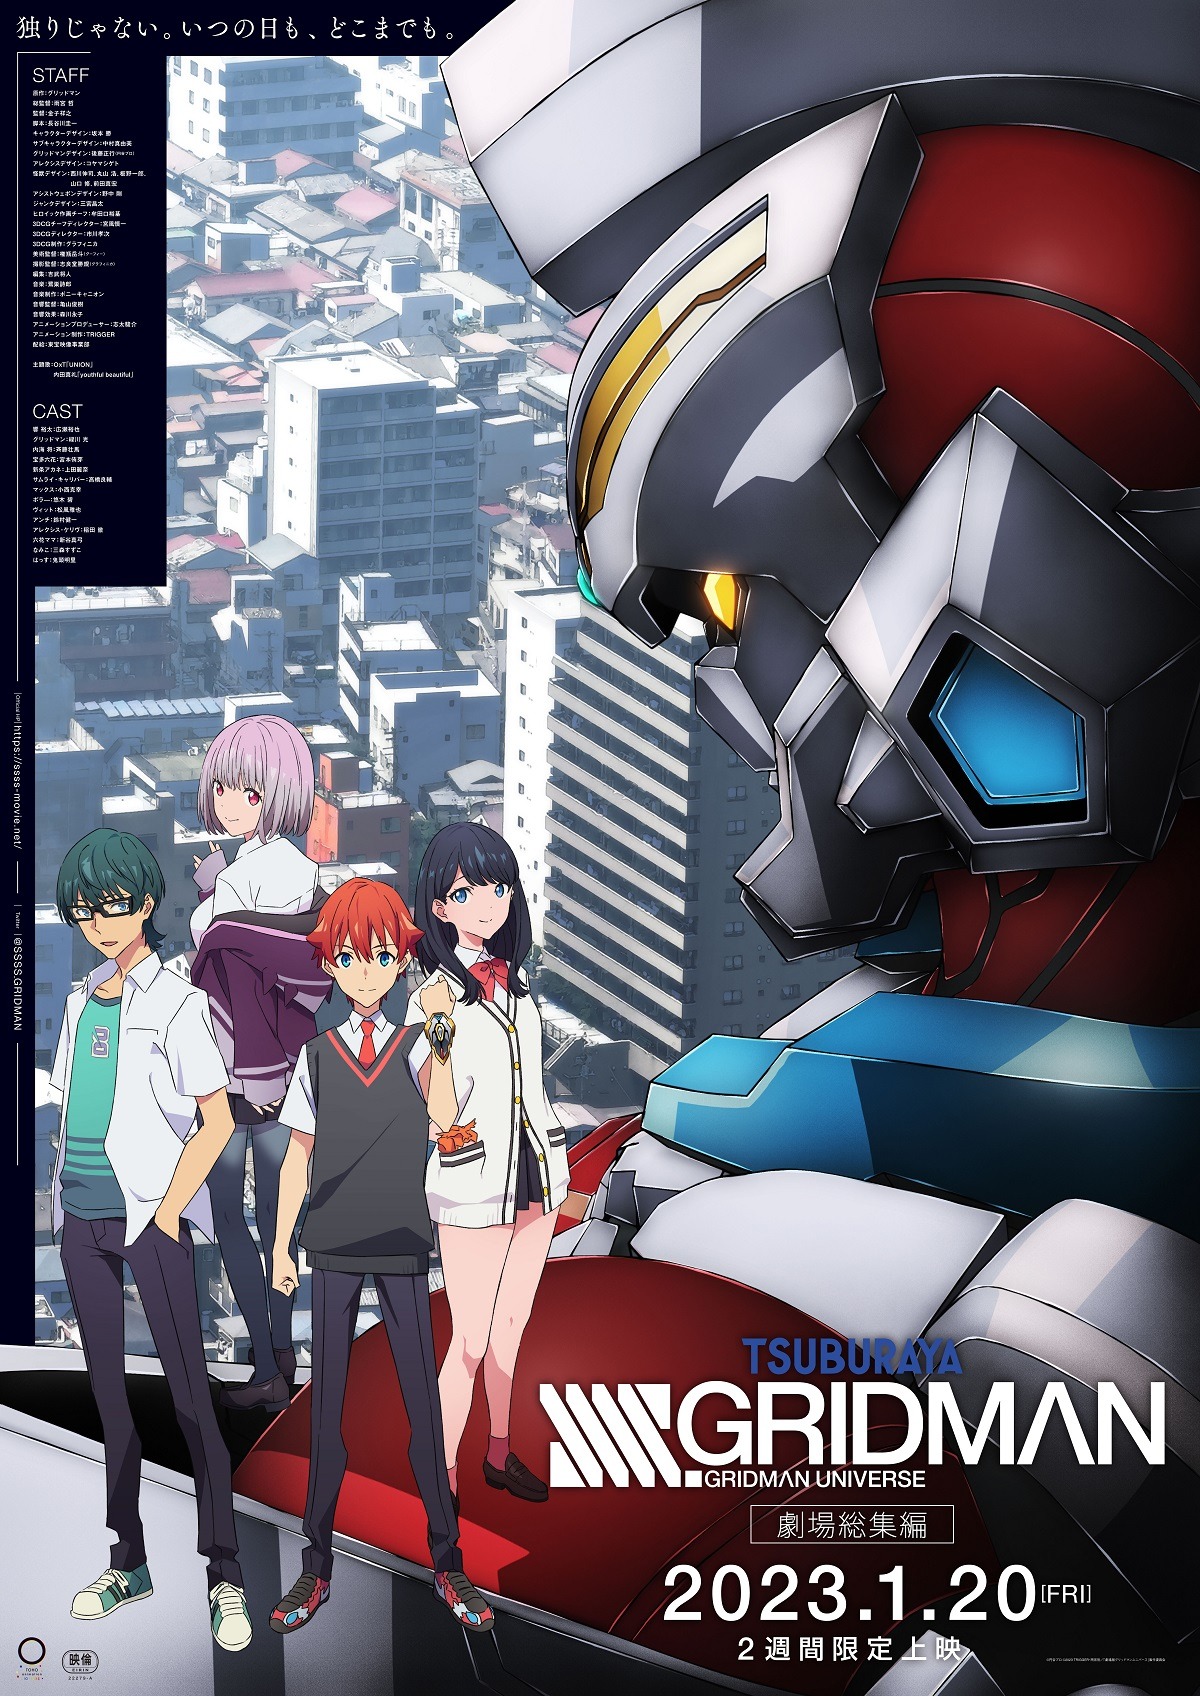 Gridman Universe” New Key Visual : r/anime